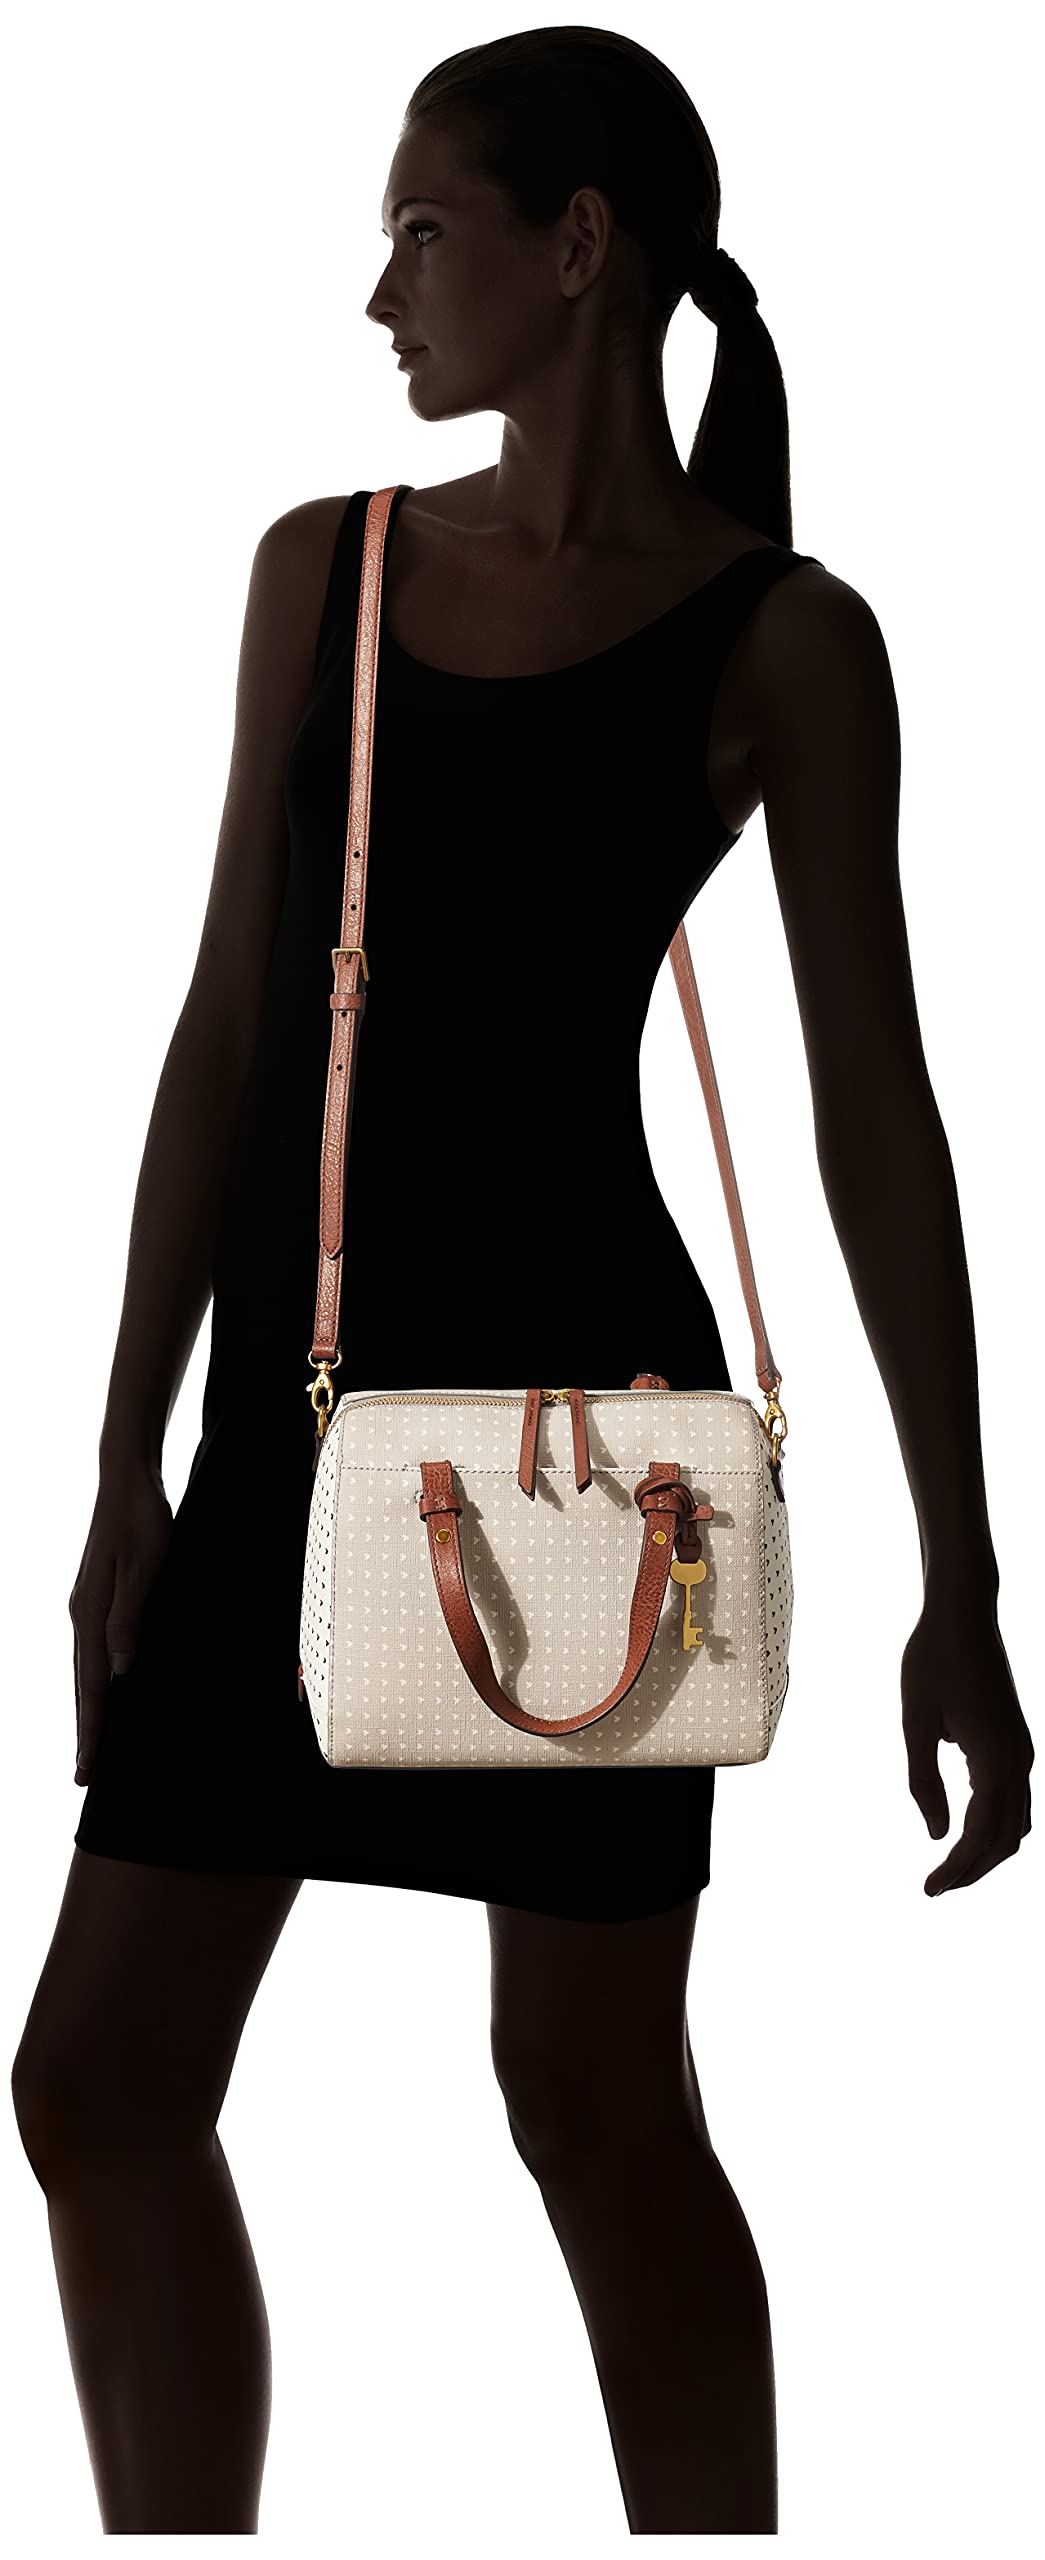 Fossil Women's Rachel Satchel Purse Handbag for Women